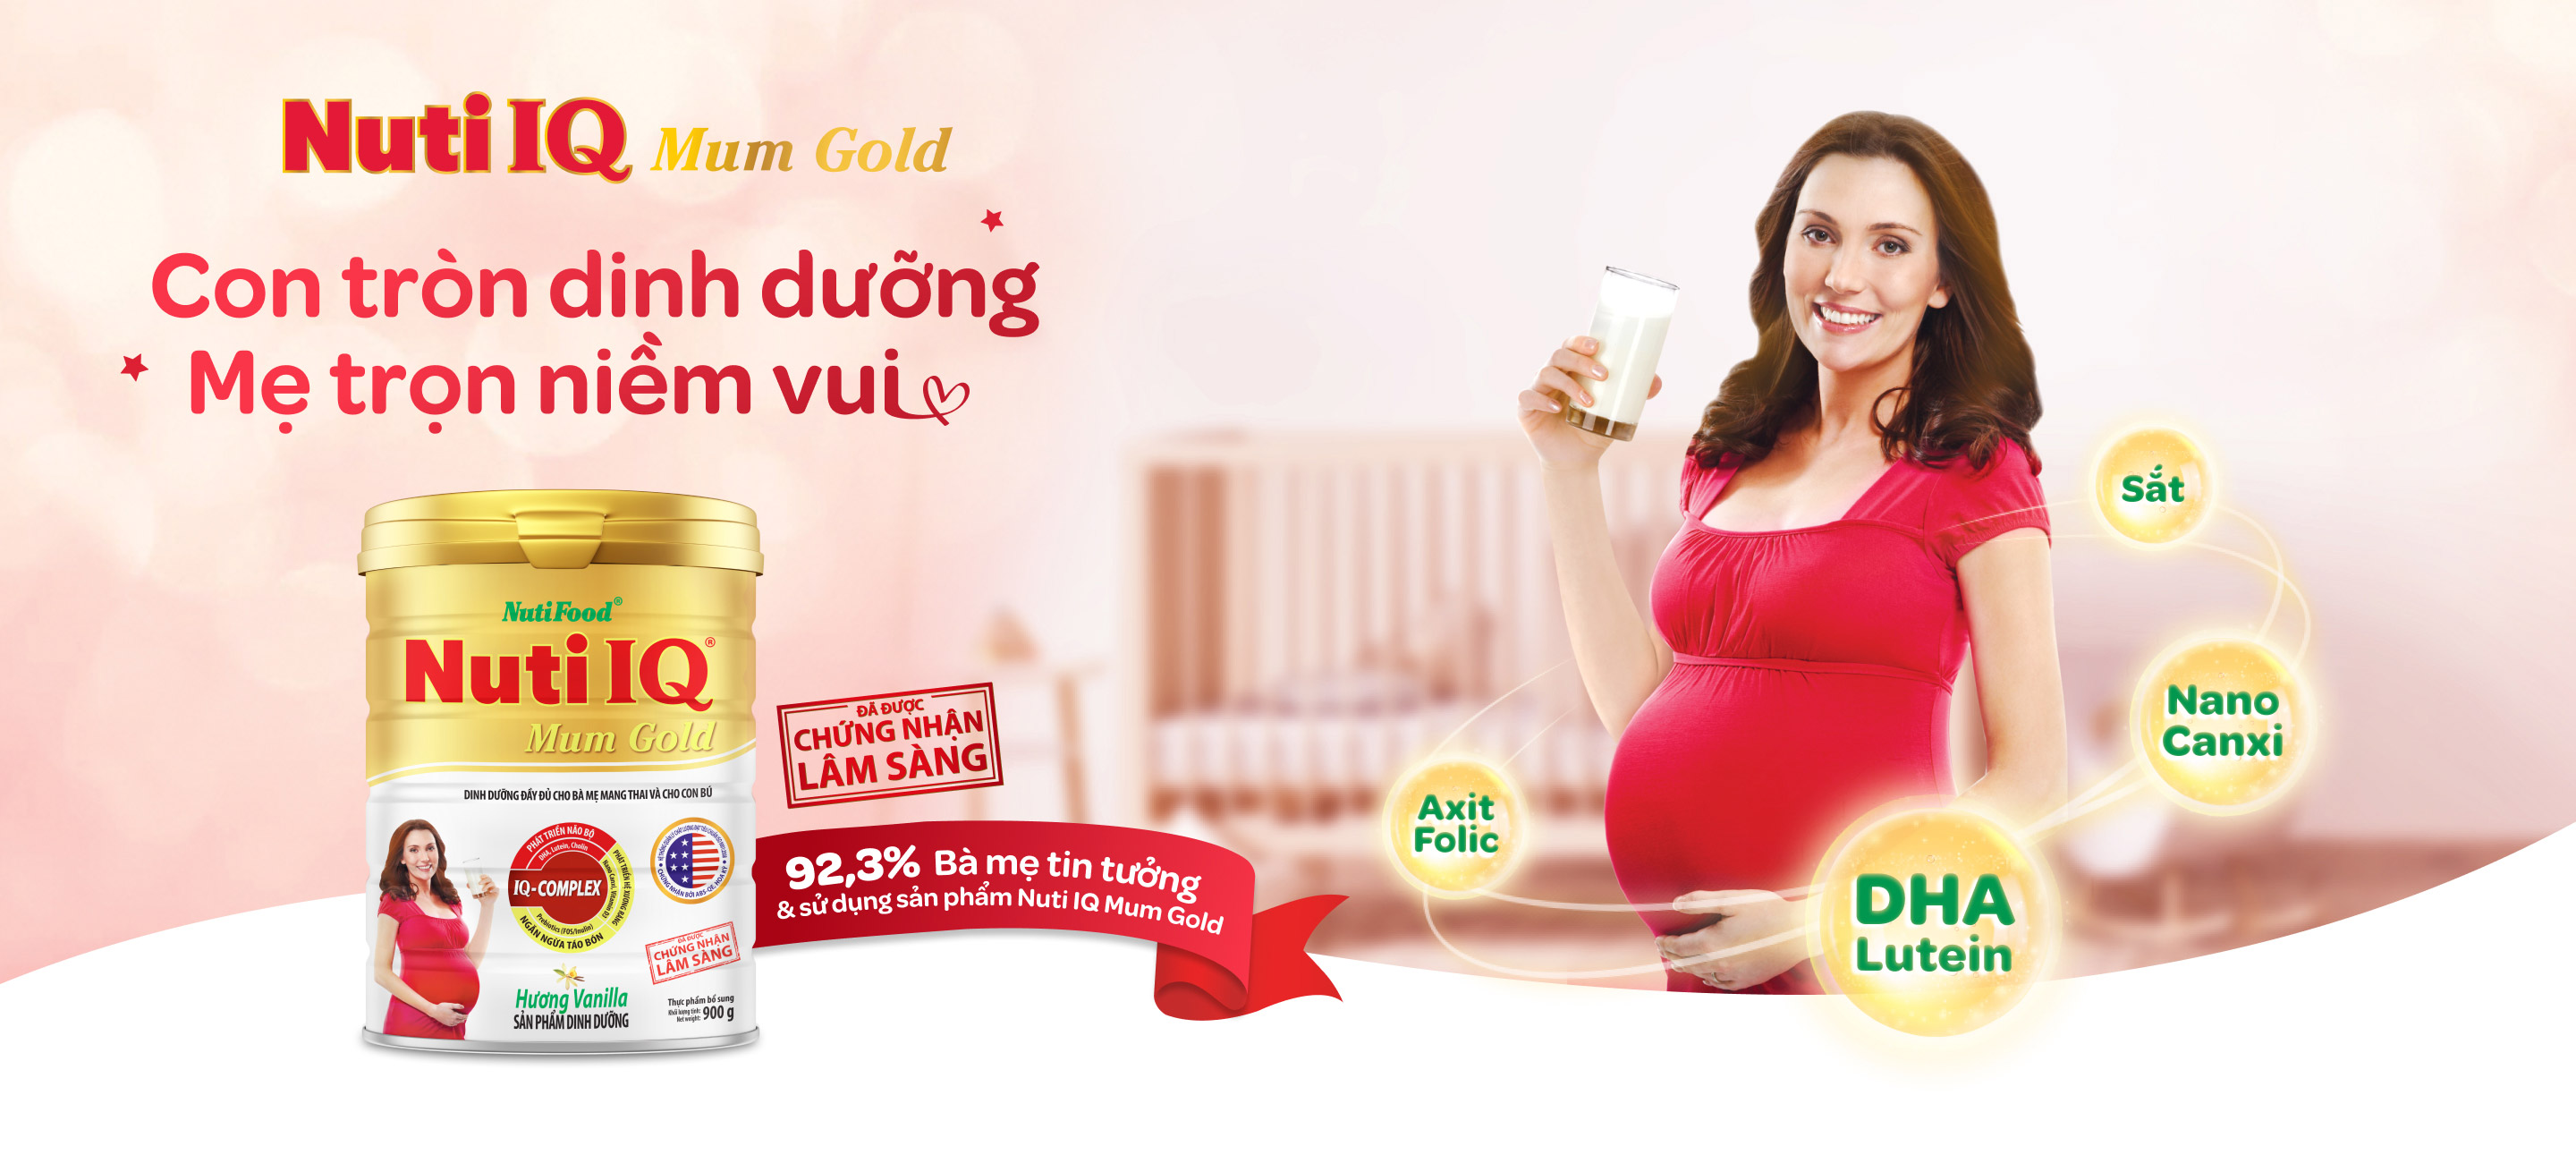 Nuti IQ Mum Gold - Sữa tốt cho mẹ và bé